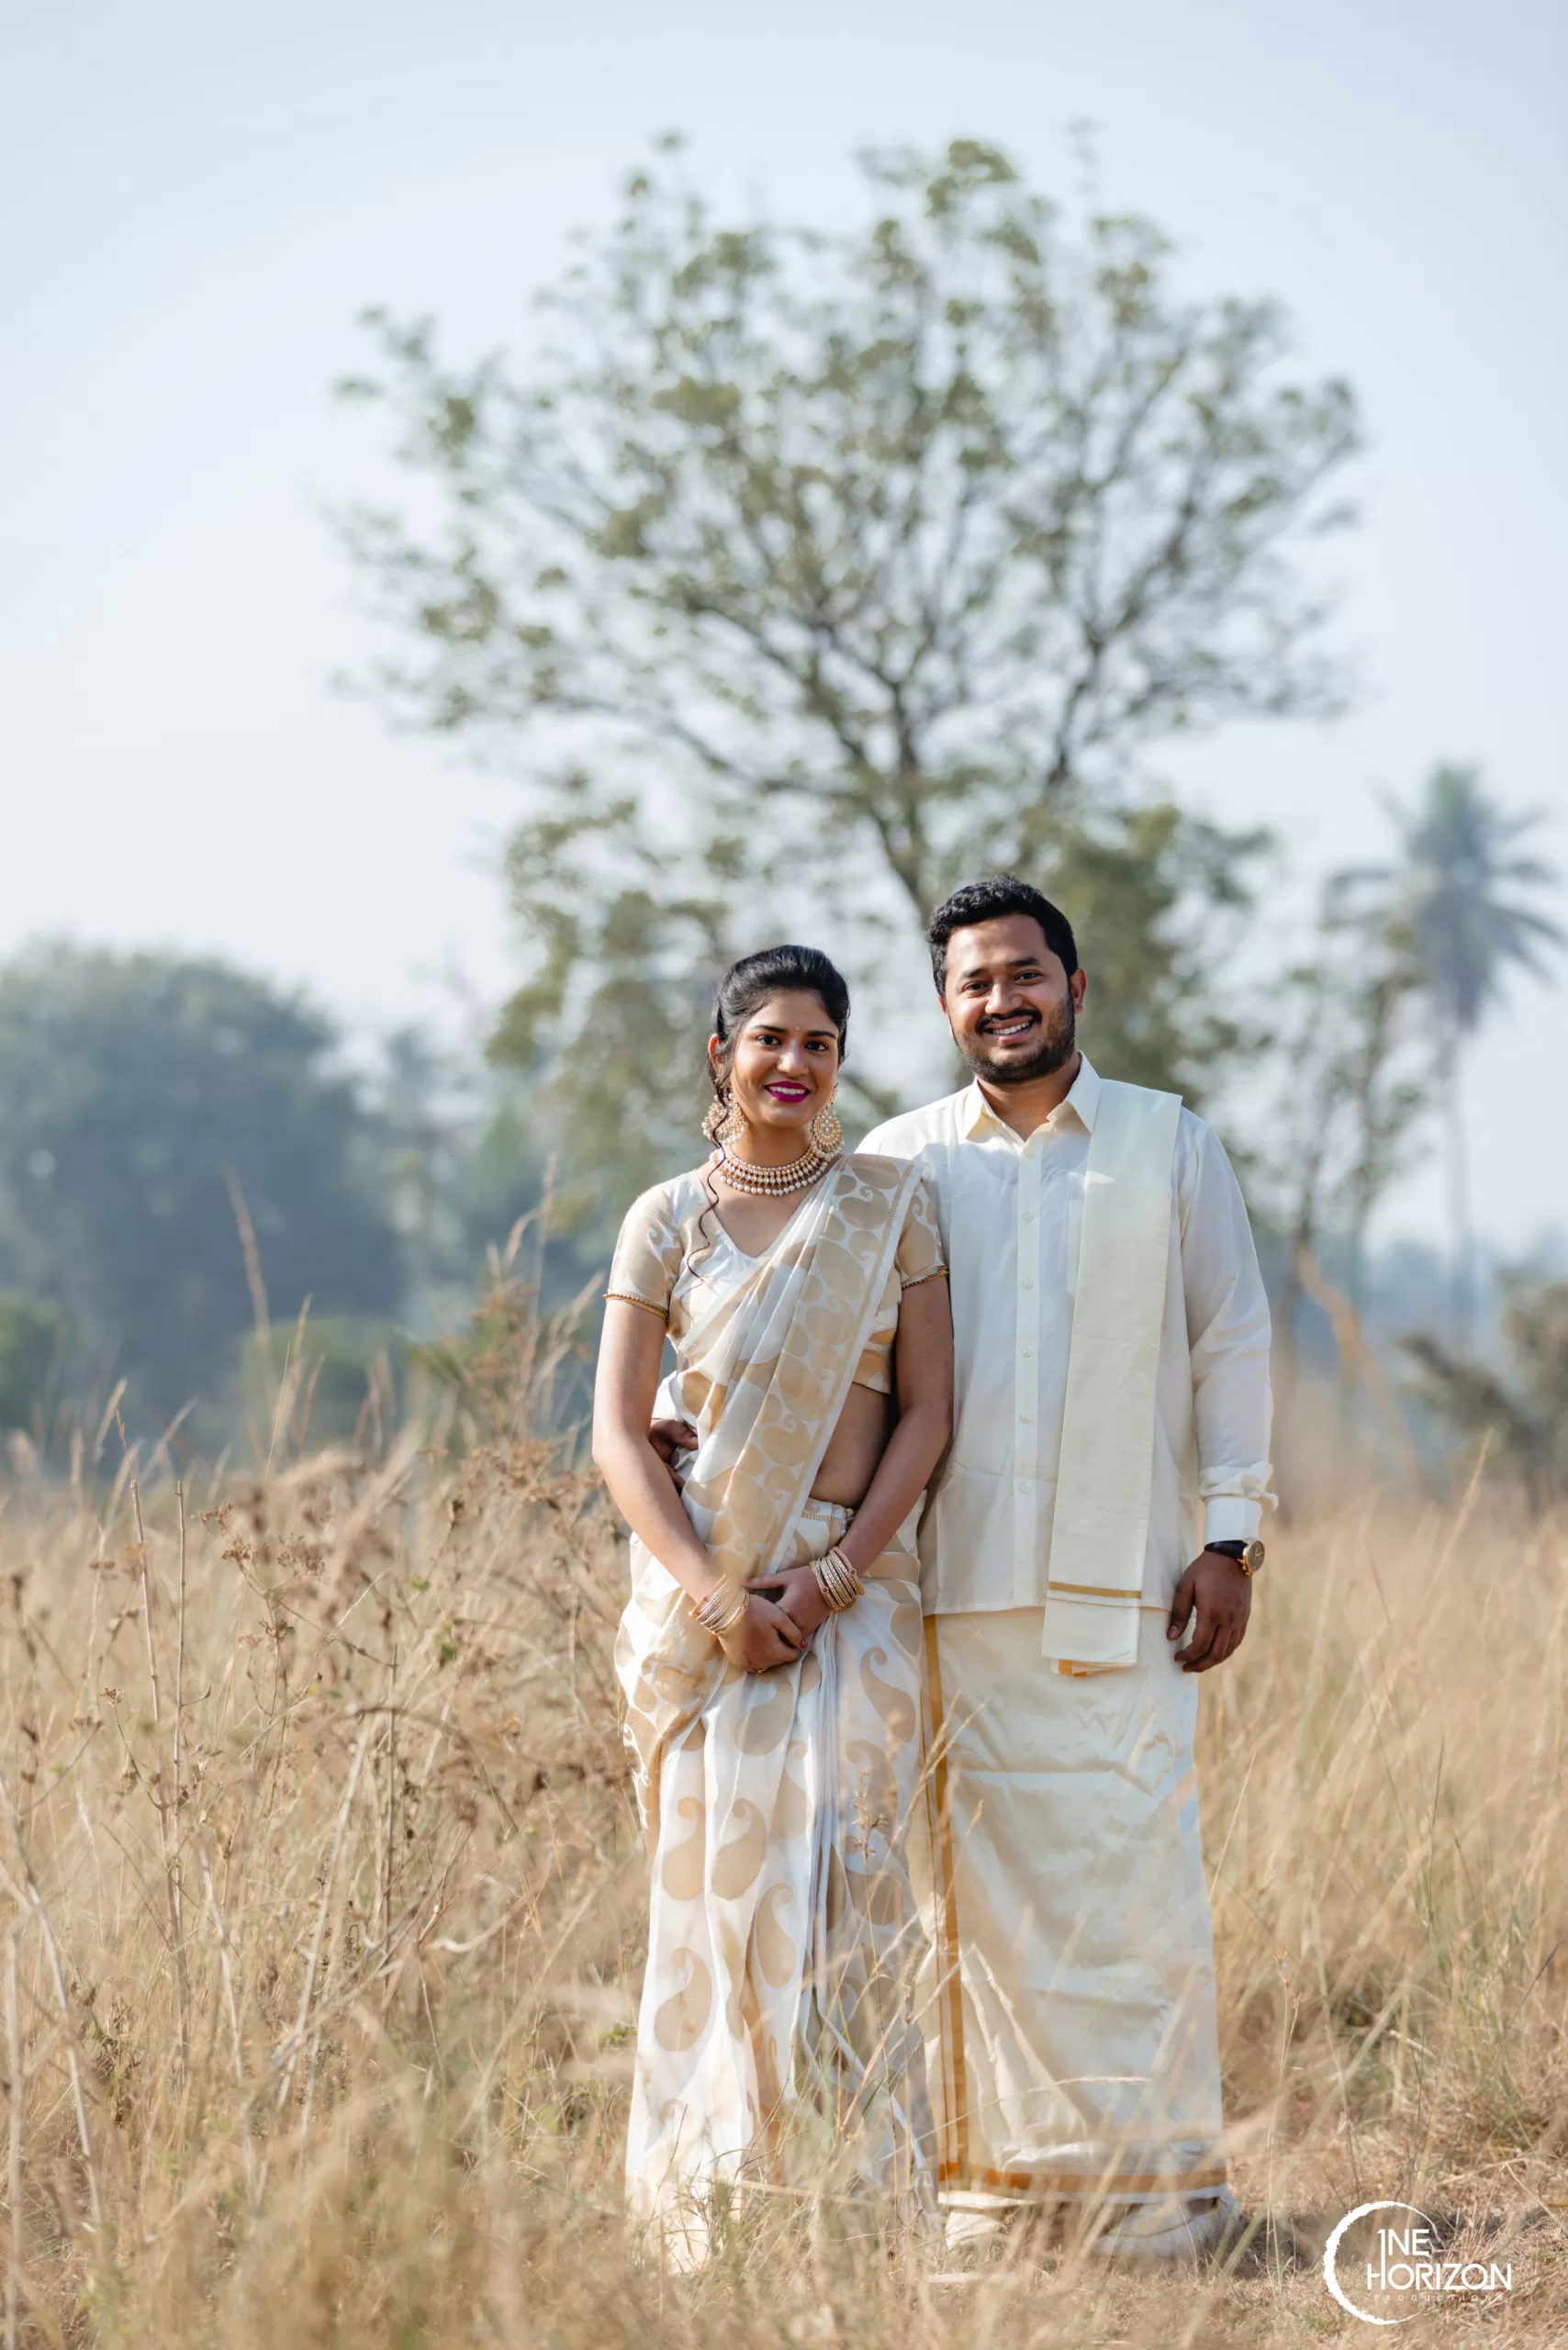 Kerala saree | Wedding couple pictures, Wedding photos poses, Indian wedding  couple